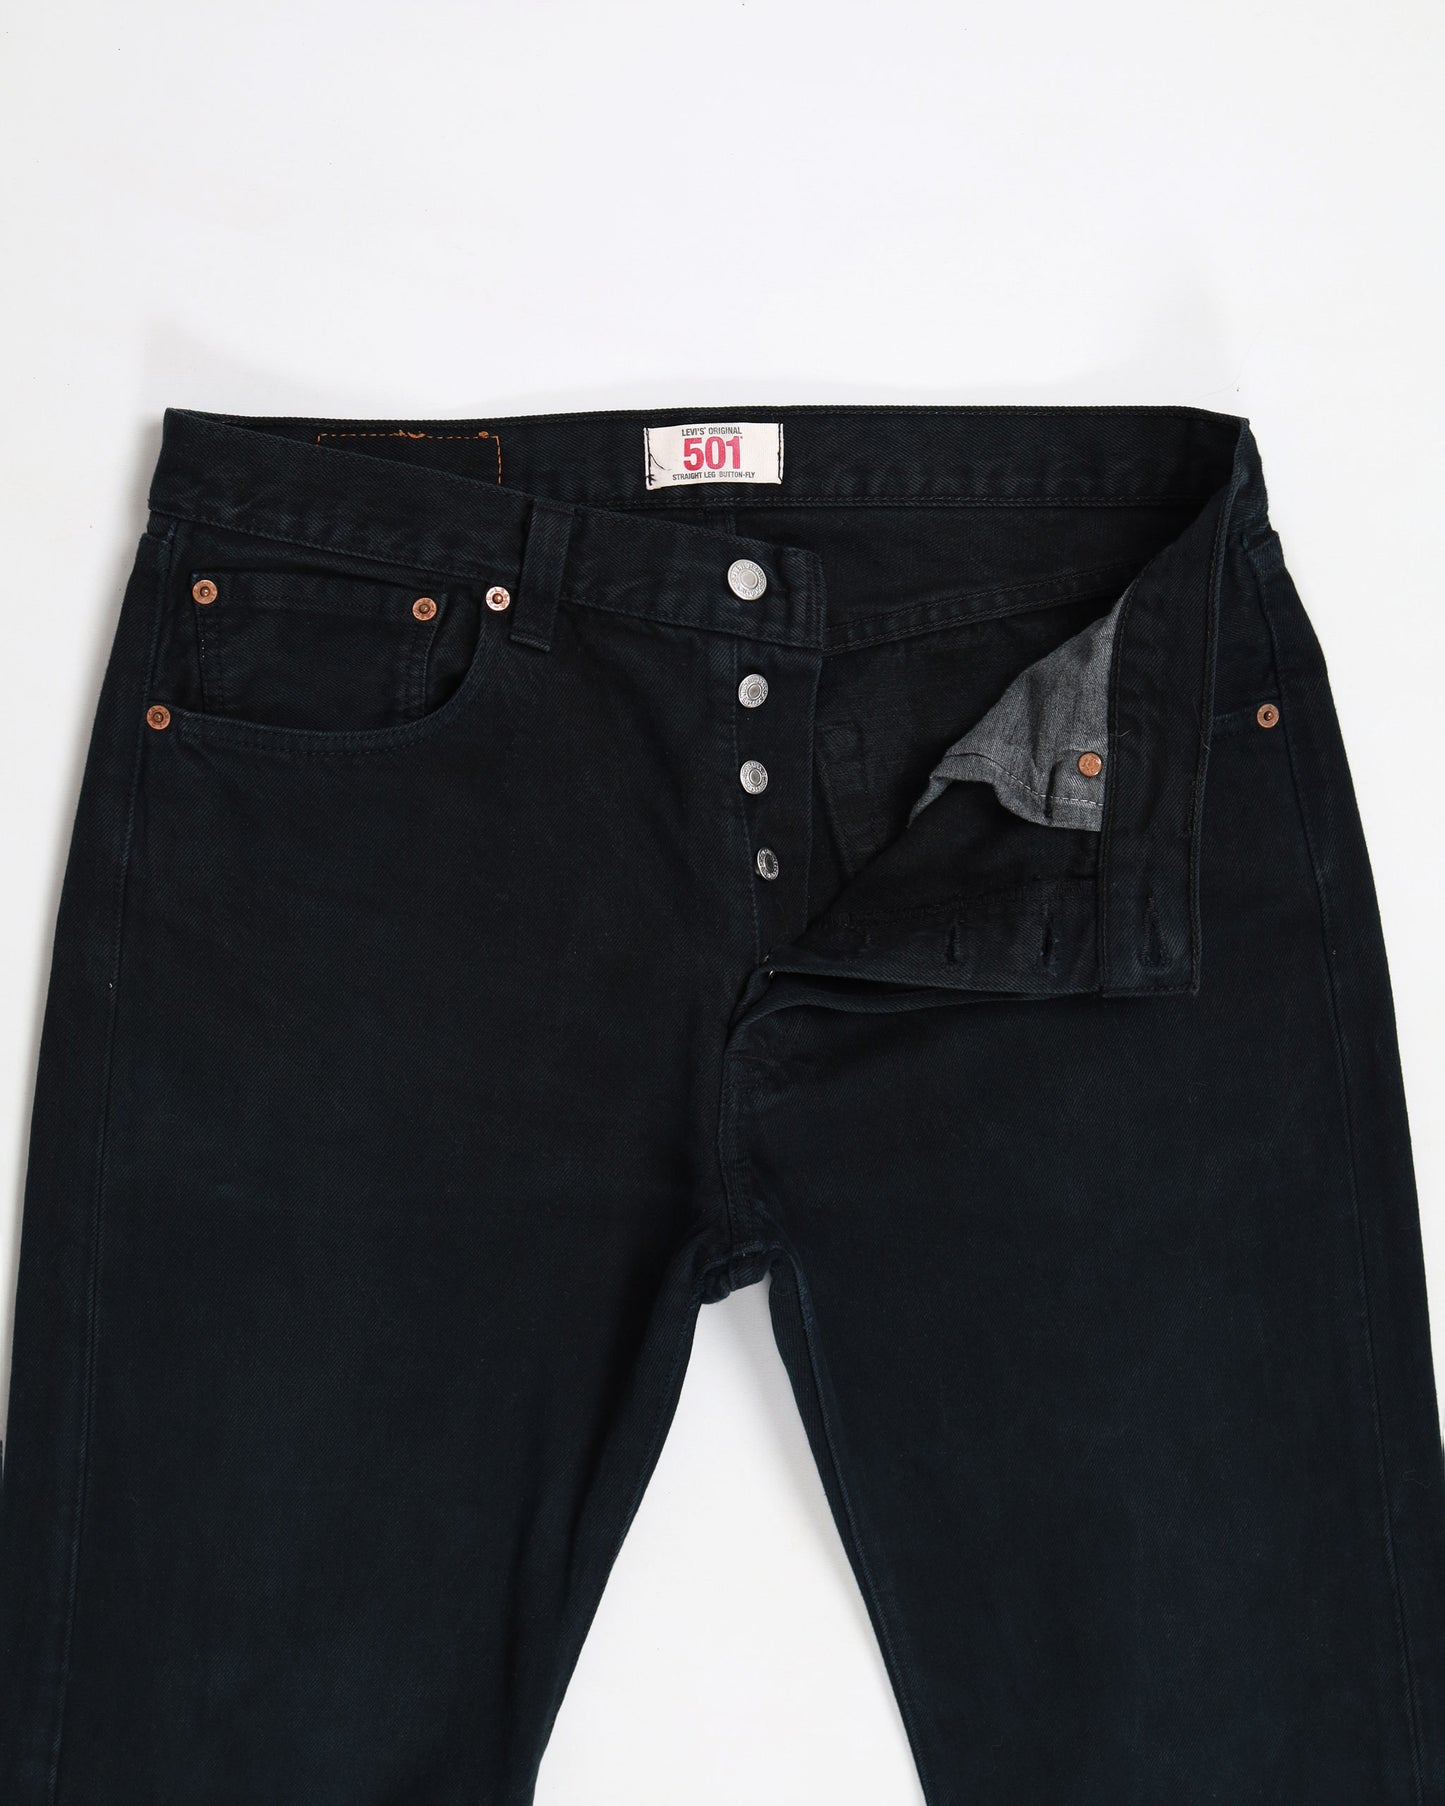 Levi’s 501 Jeans in Black W32